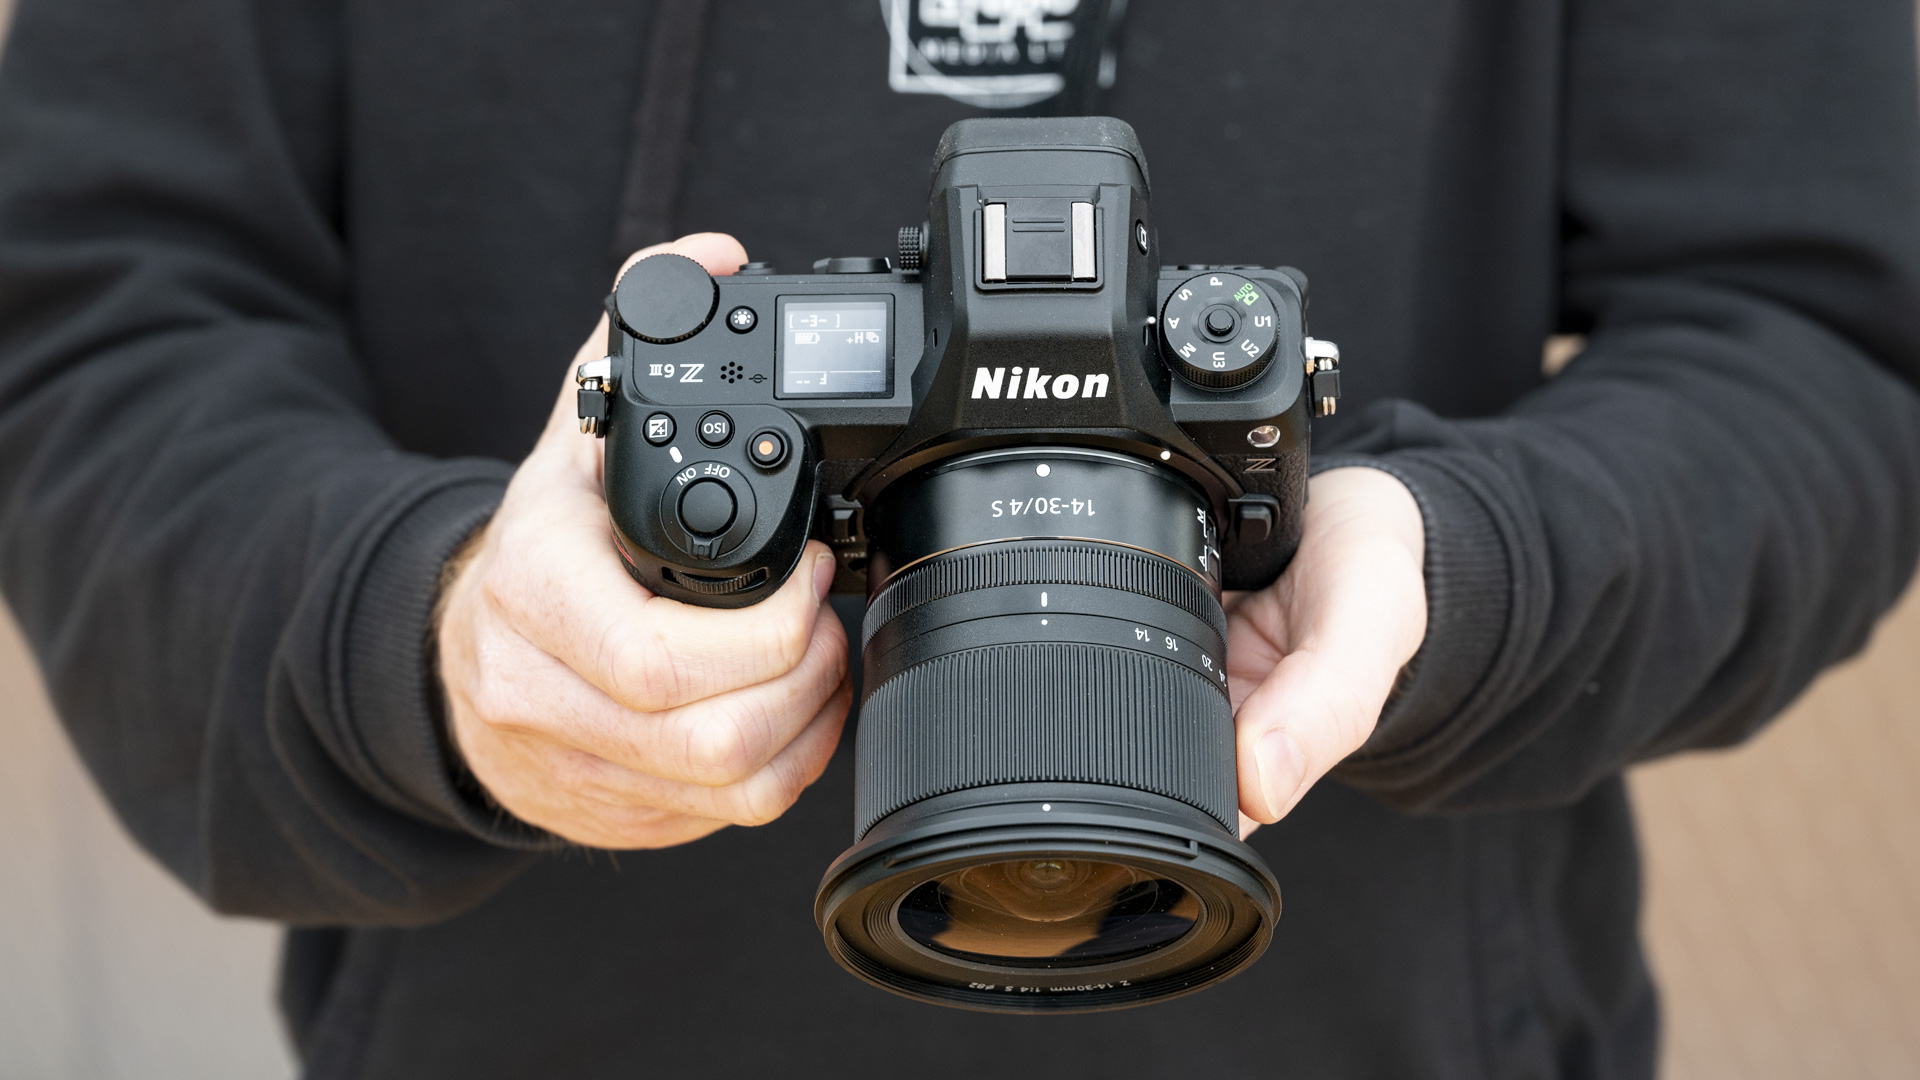 Nikon Z6 III camera in the hand, top down